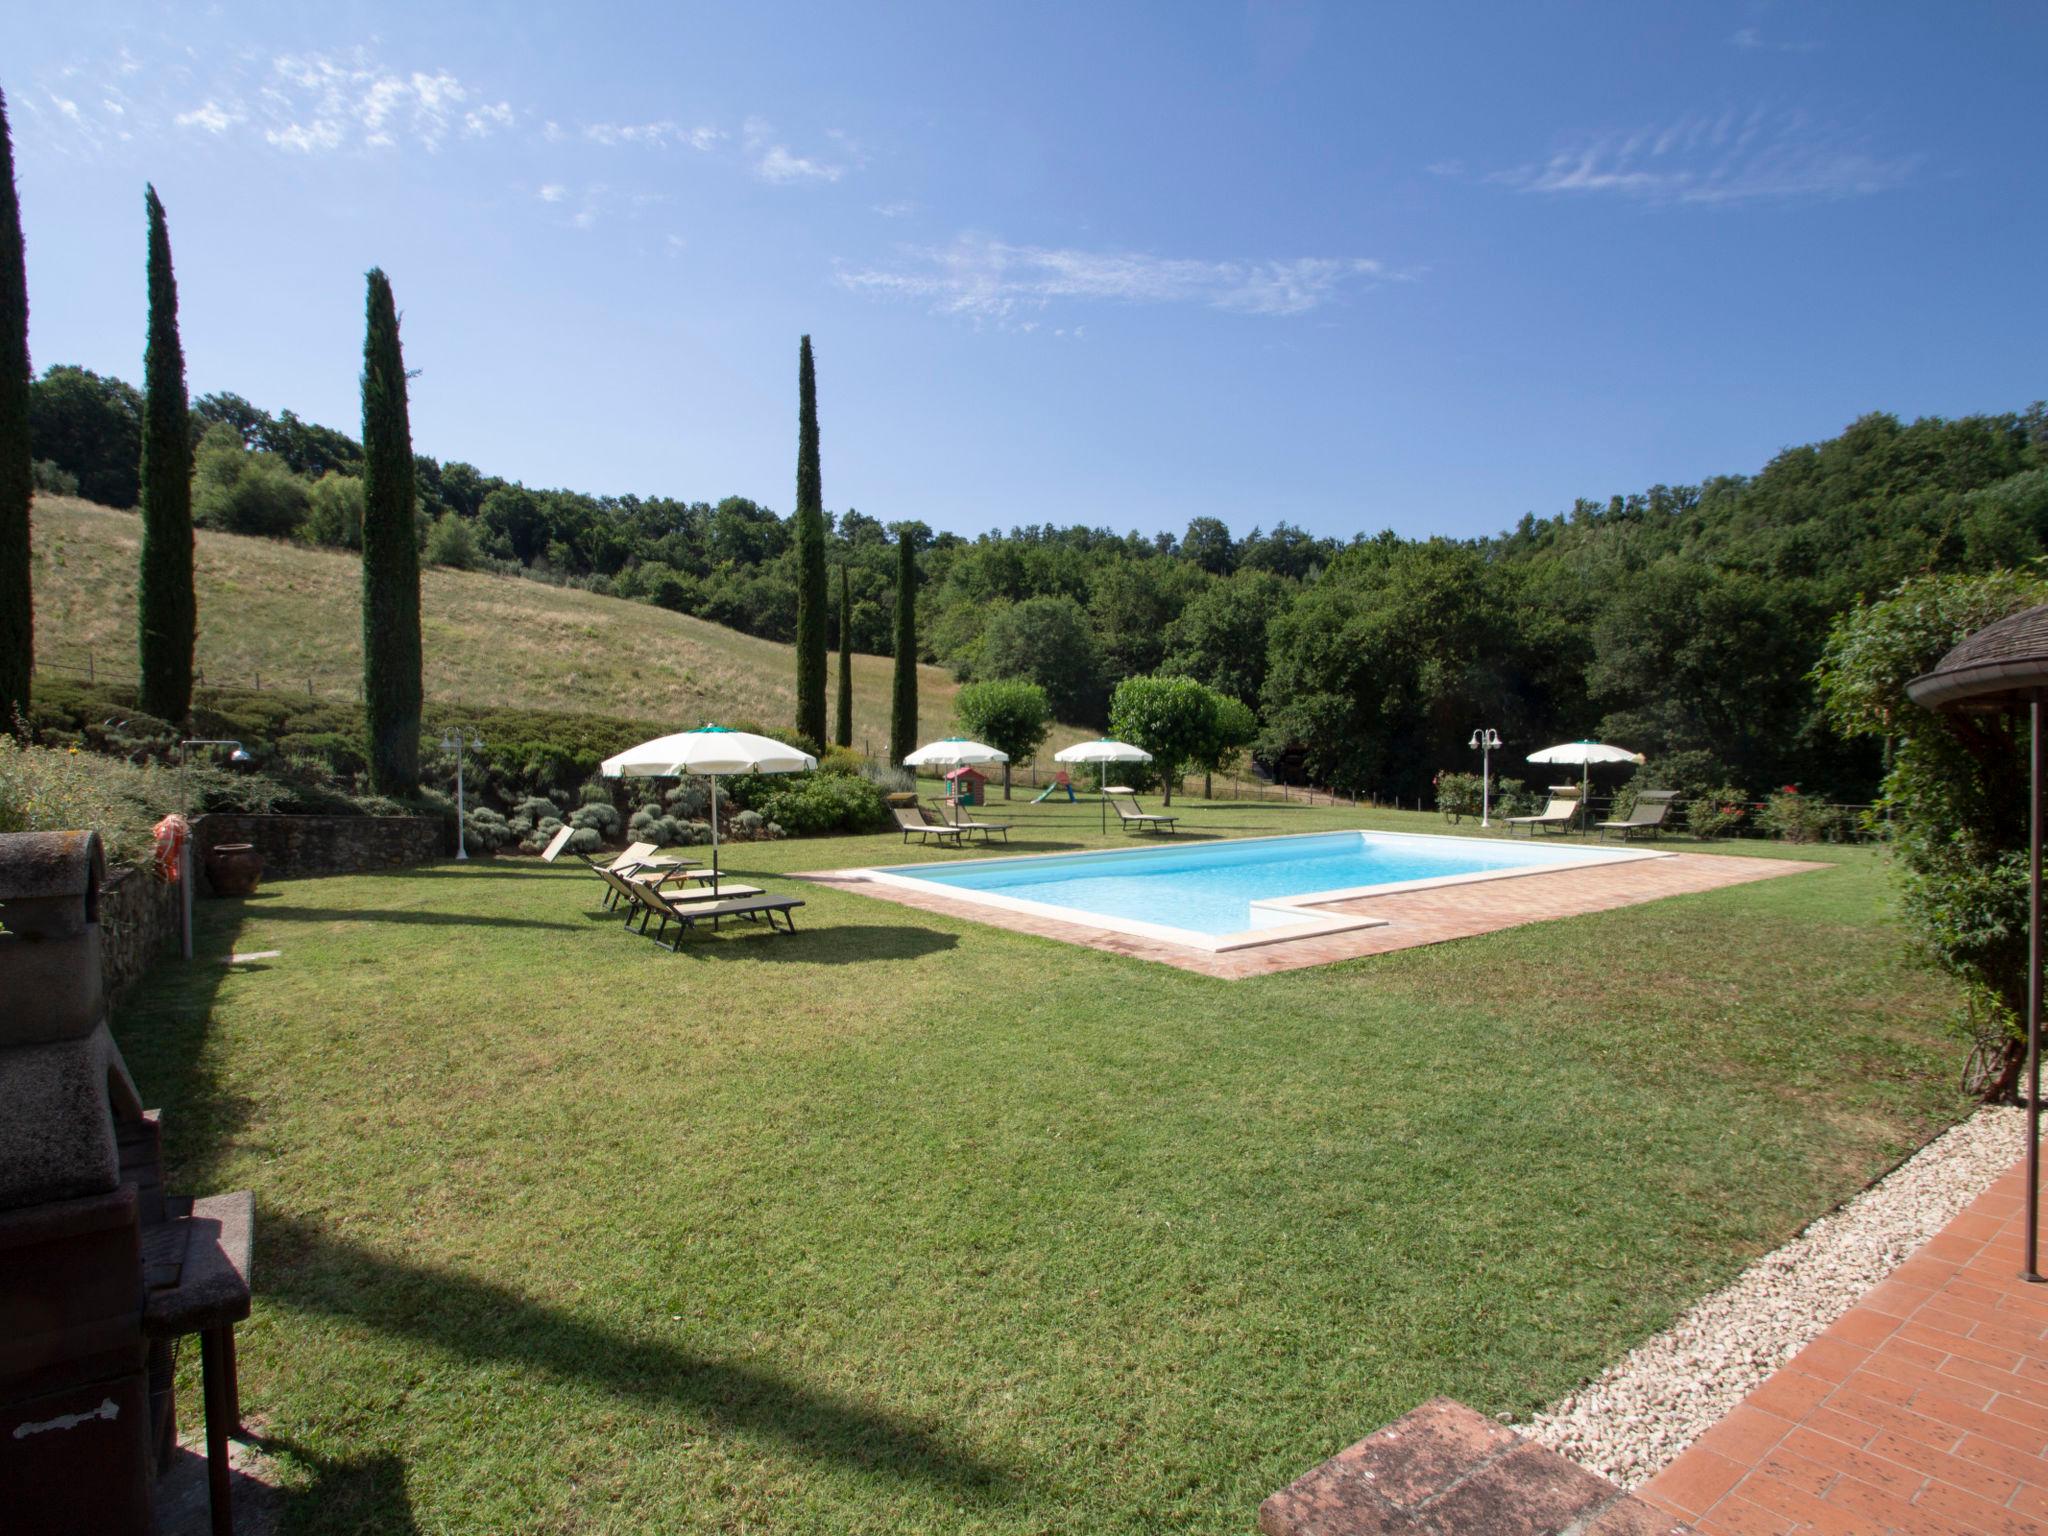 Photo 7 - Appartement de 2 chambres à San Giovanni Valdarno avec piscine et terrasse